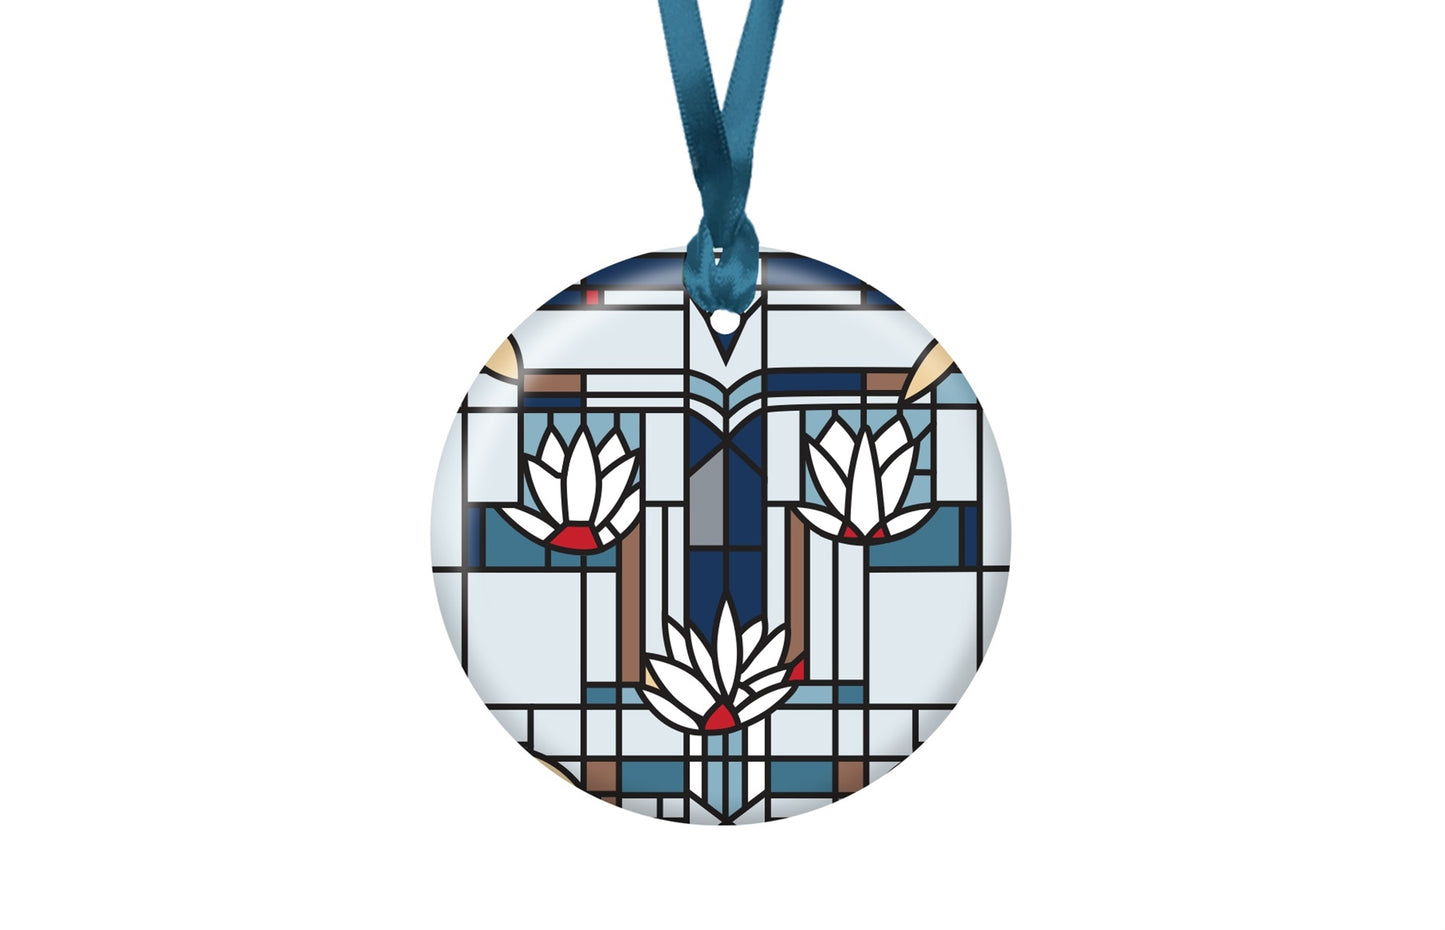 Frank Lloyd Wright "Waterlilies" Porcelain Ornament